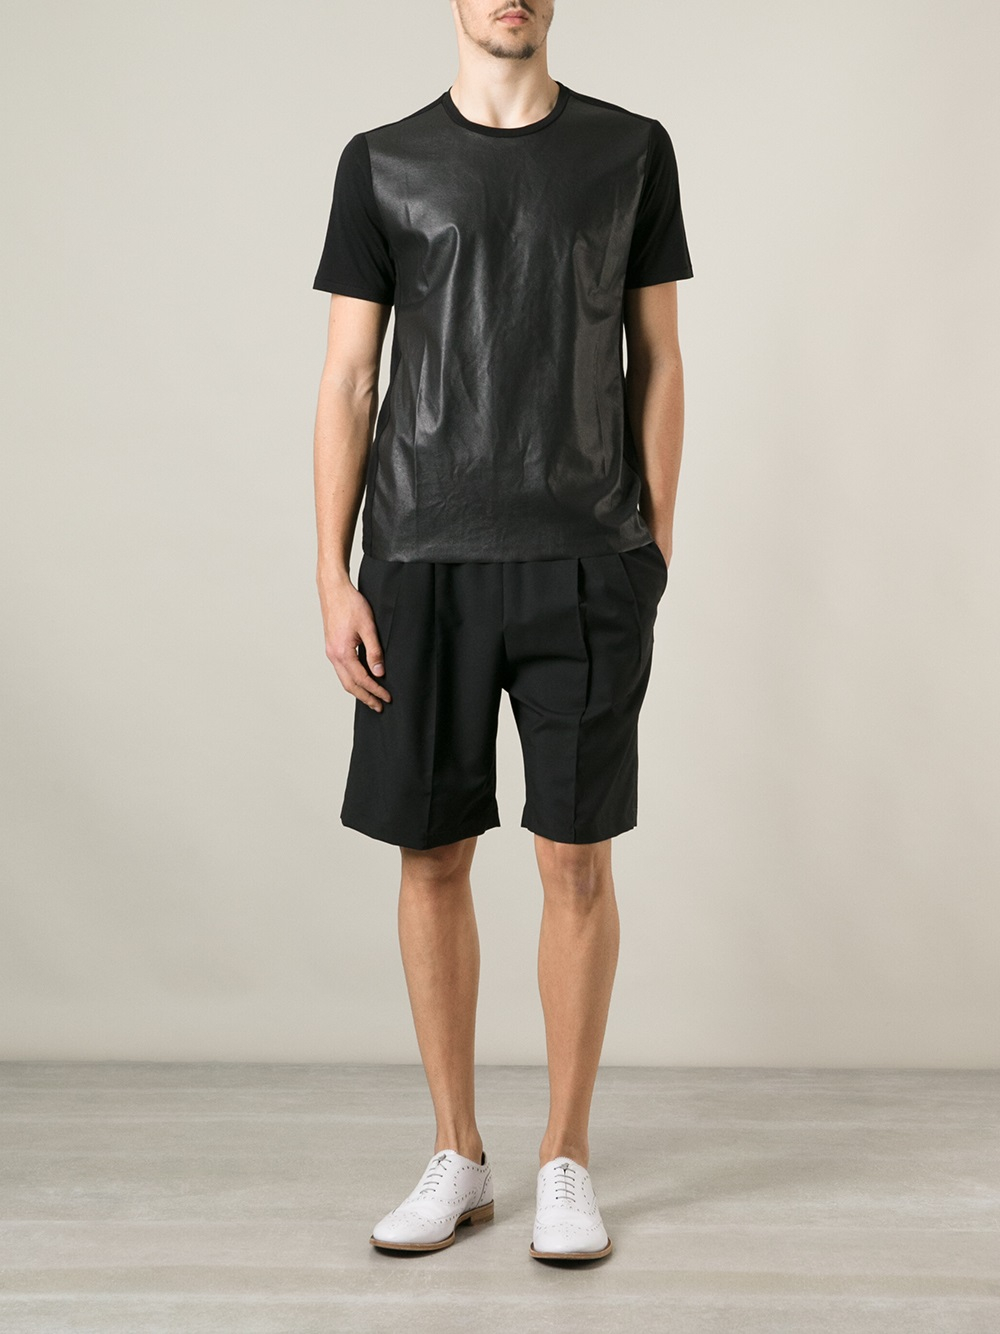 Lyst - Neil Barrett Faux Leather Panel Tshirt in Black for Men